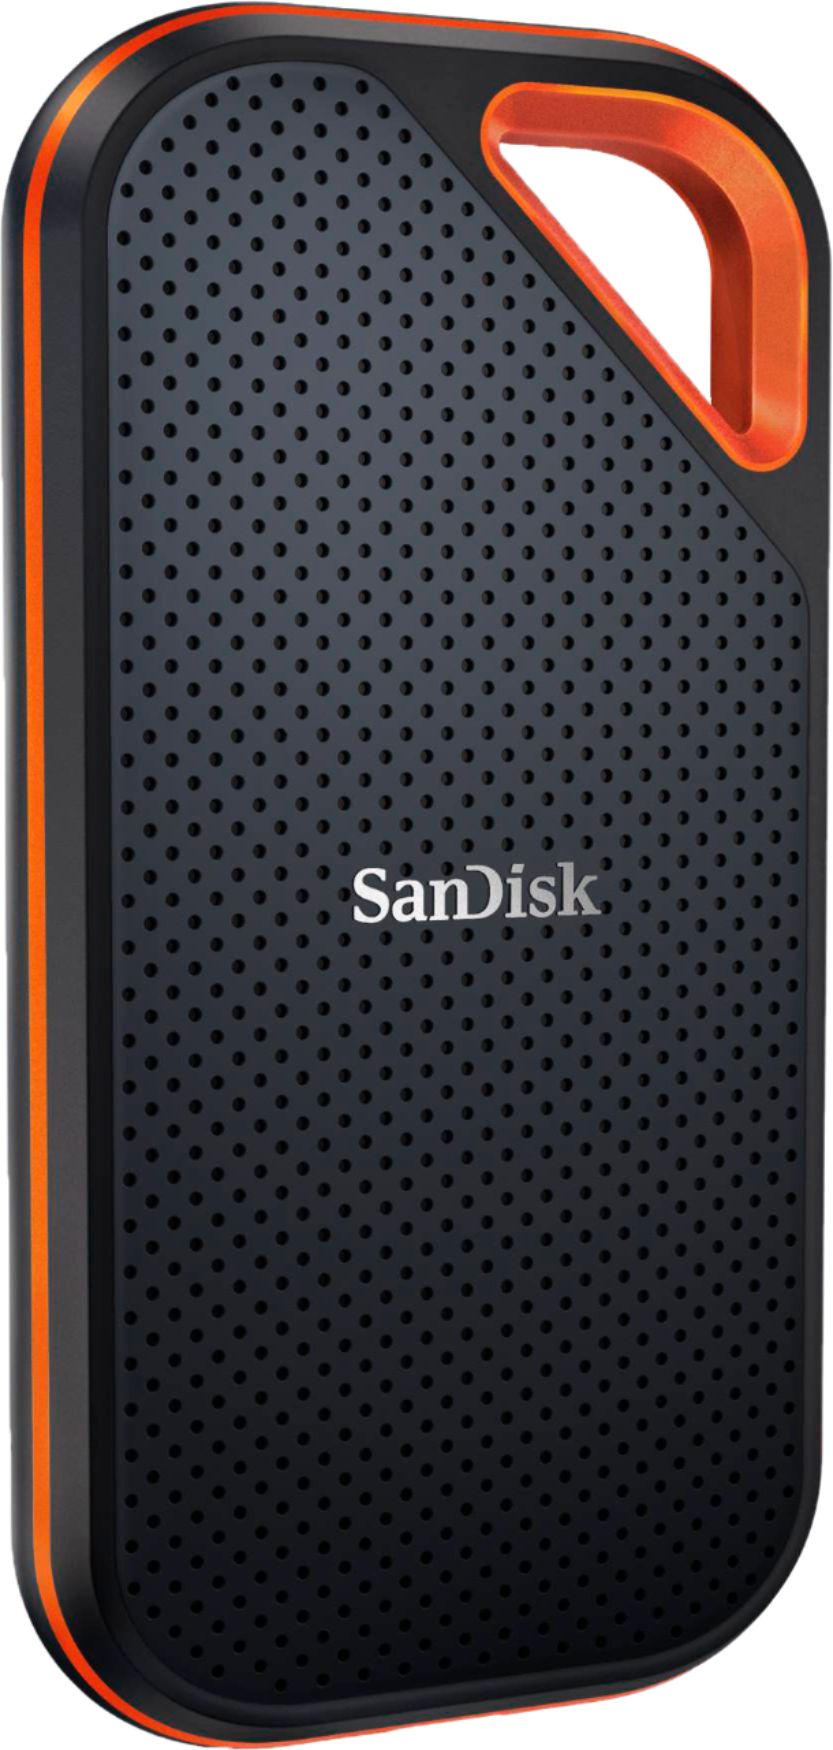 SanDisk Extreme PRO 1TB USB 3.1